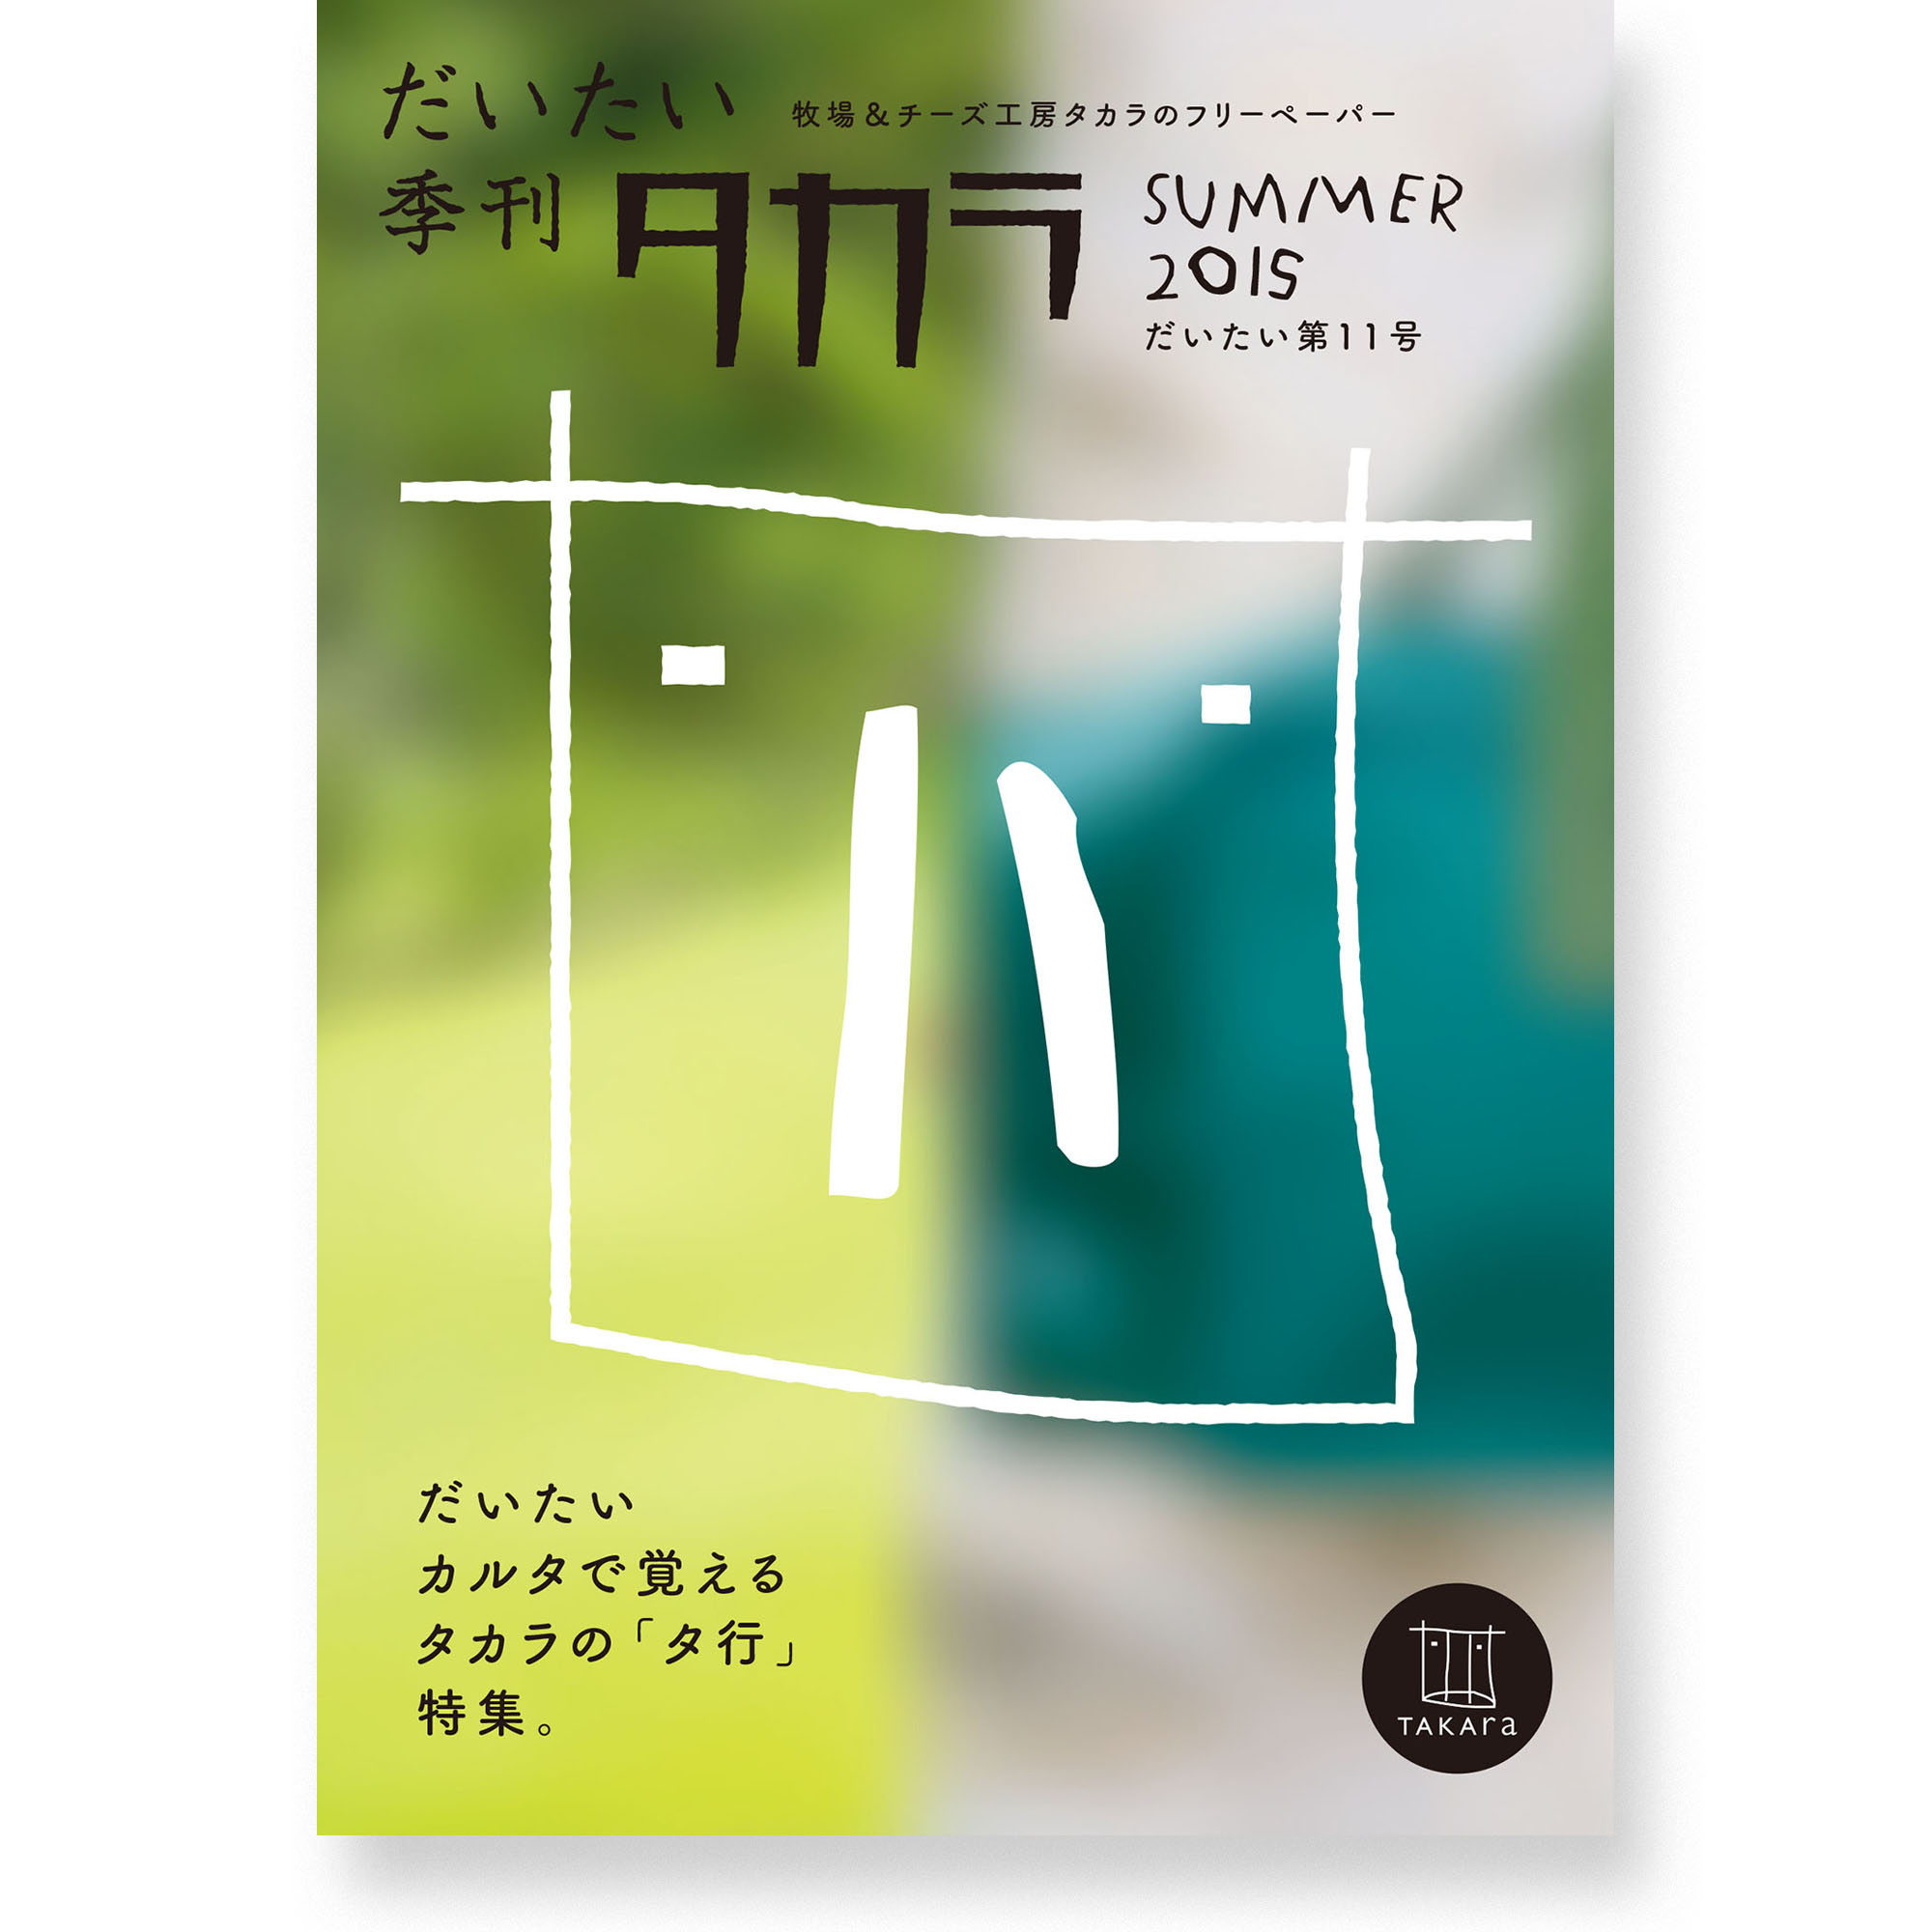 Daitai Quarterly Takara Vol.11